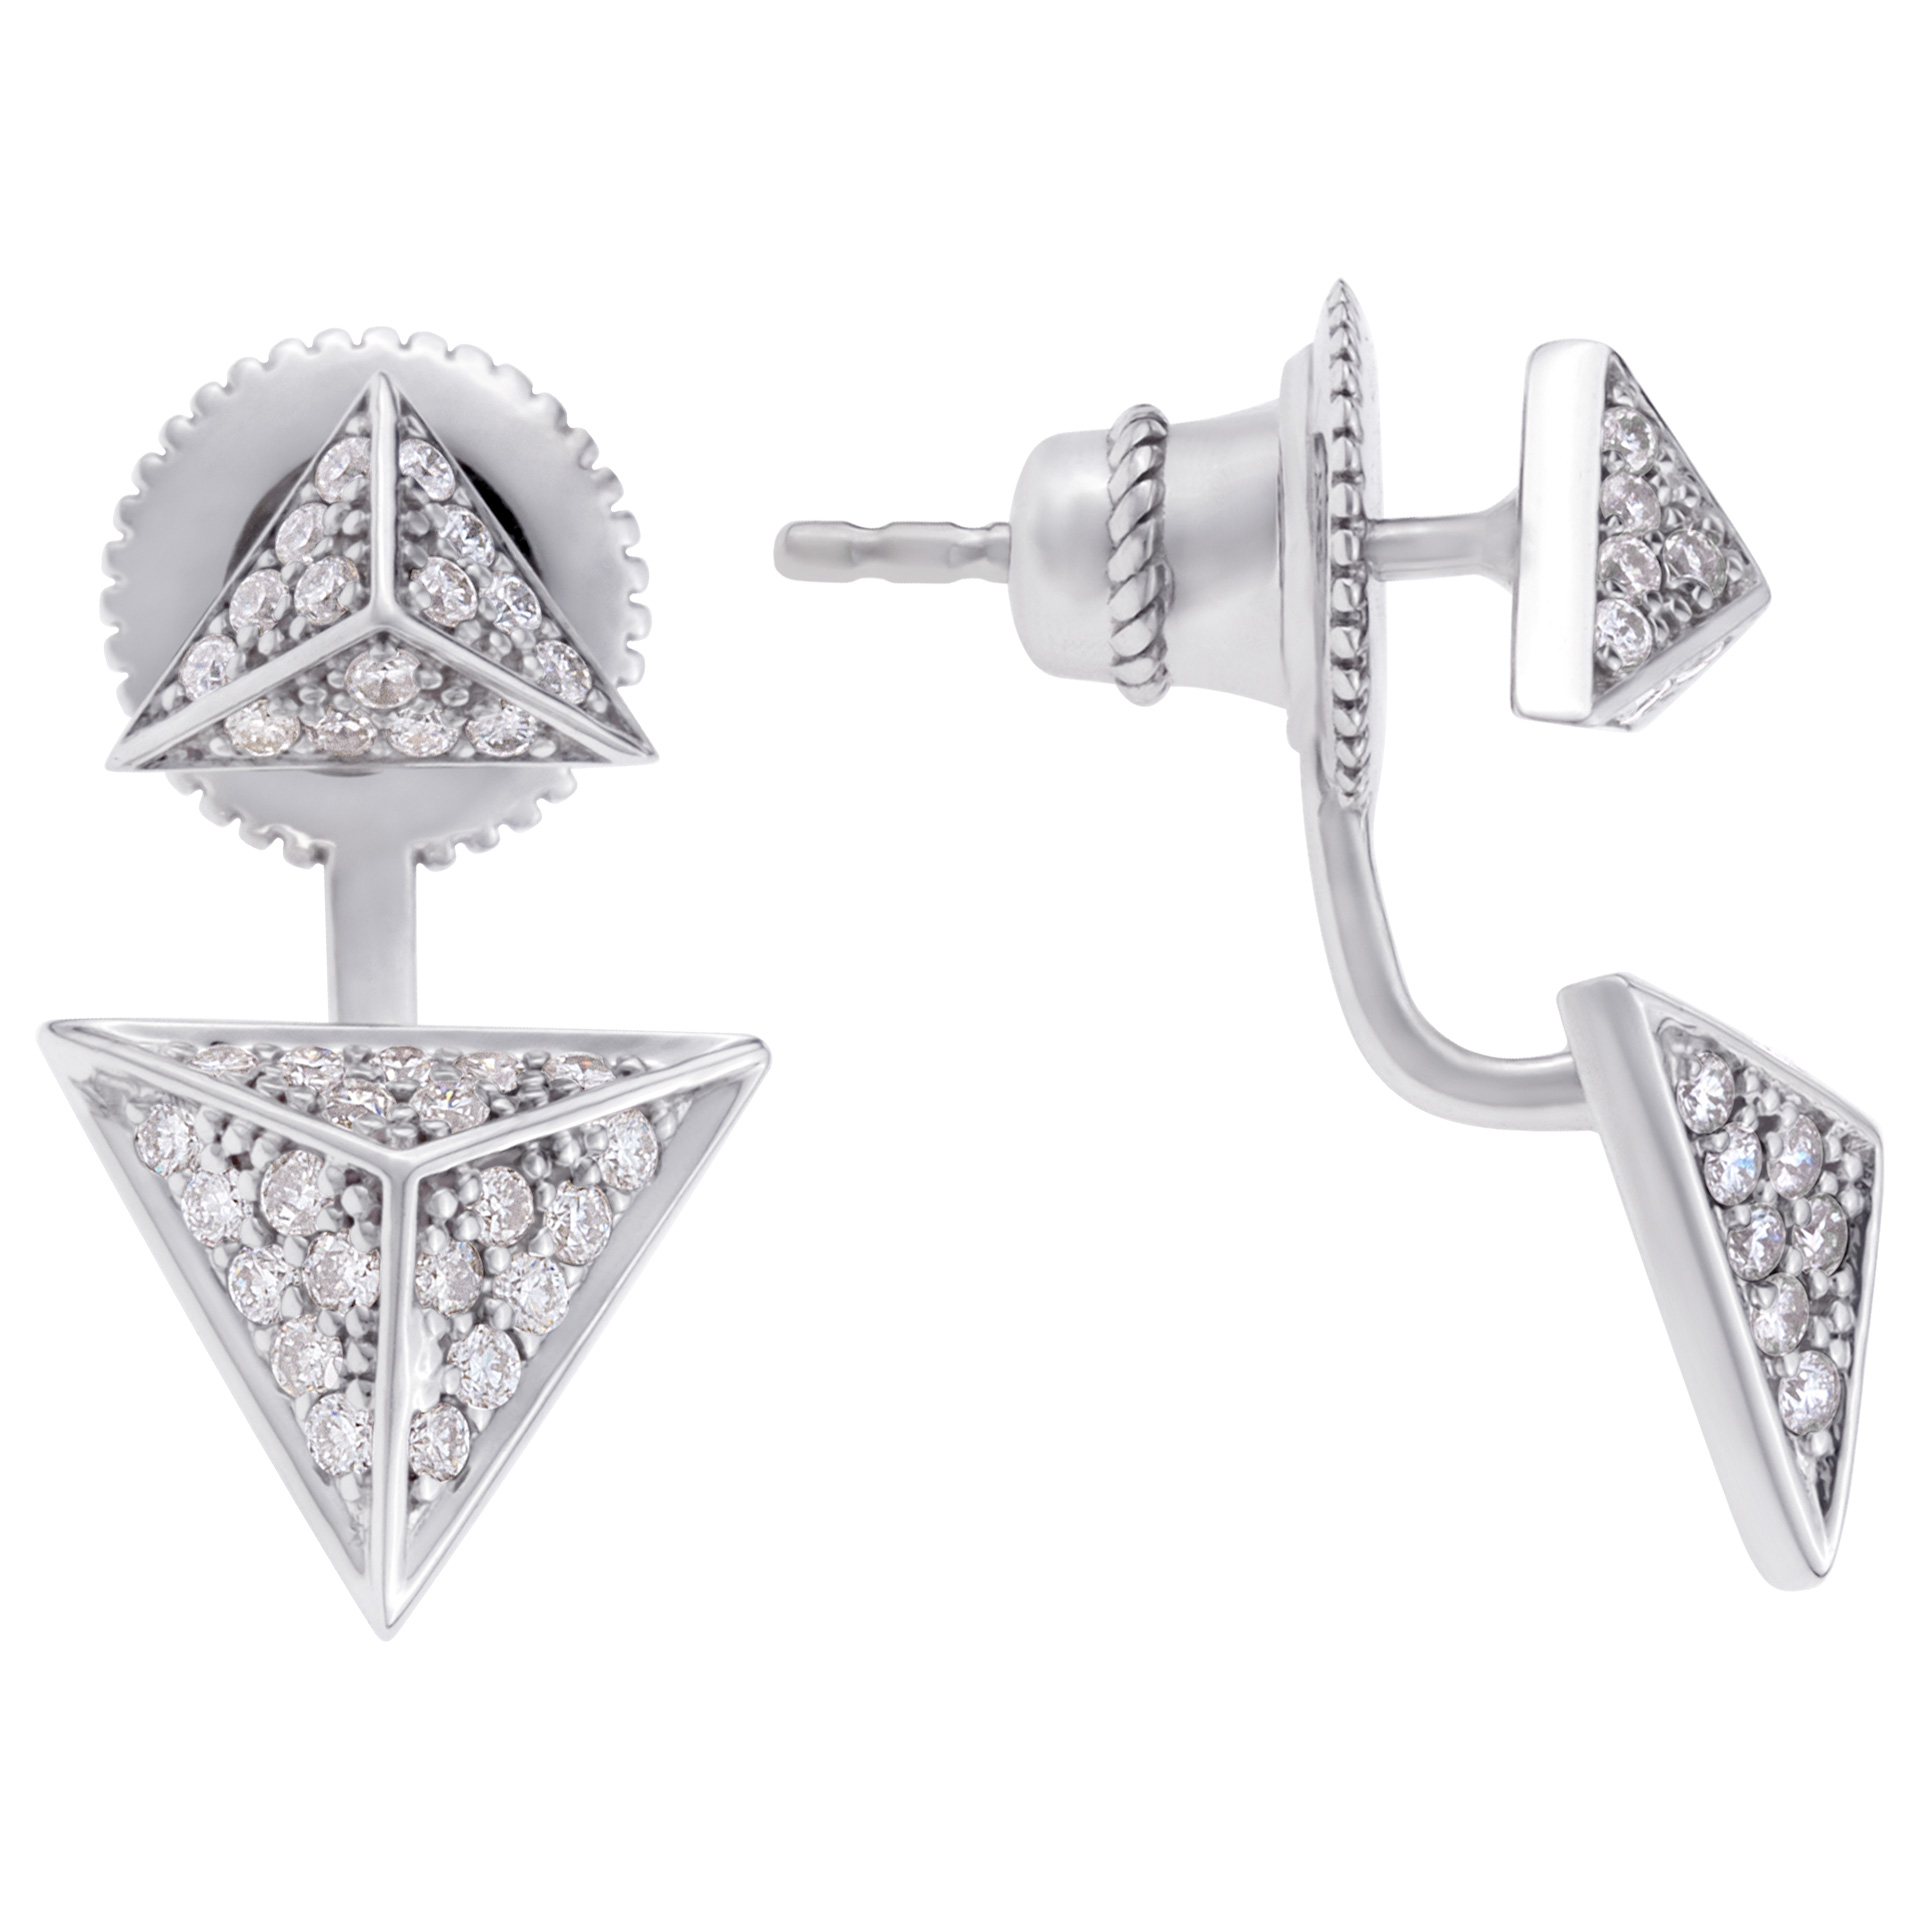 Triangle diamond earrings 18k white gold. 0.48 carats in diamonds